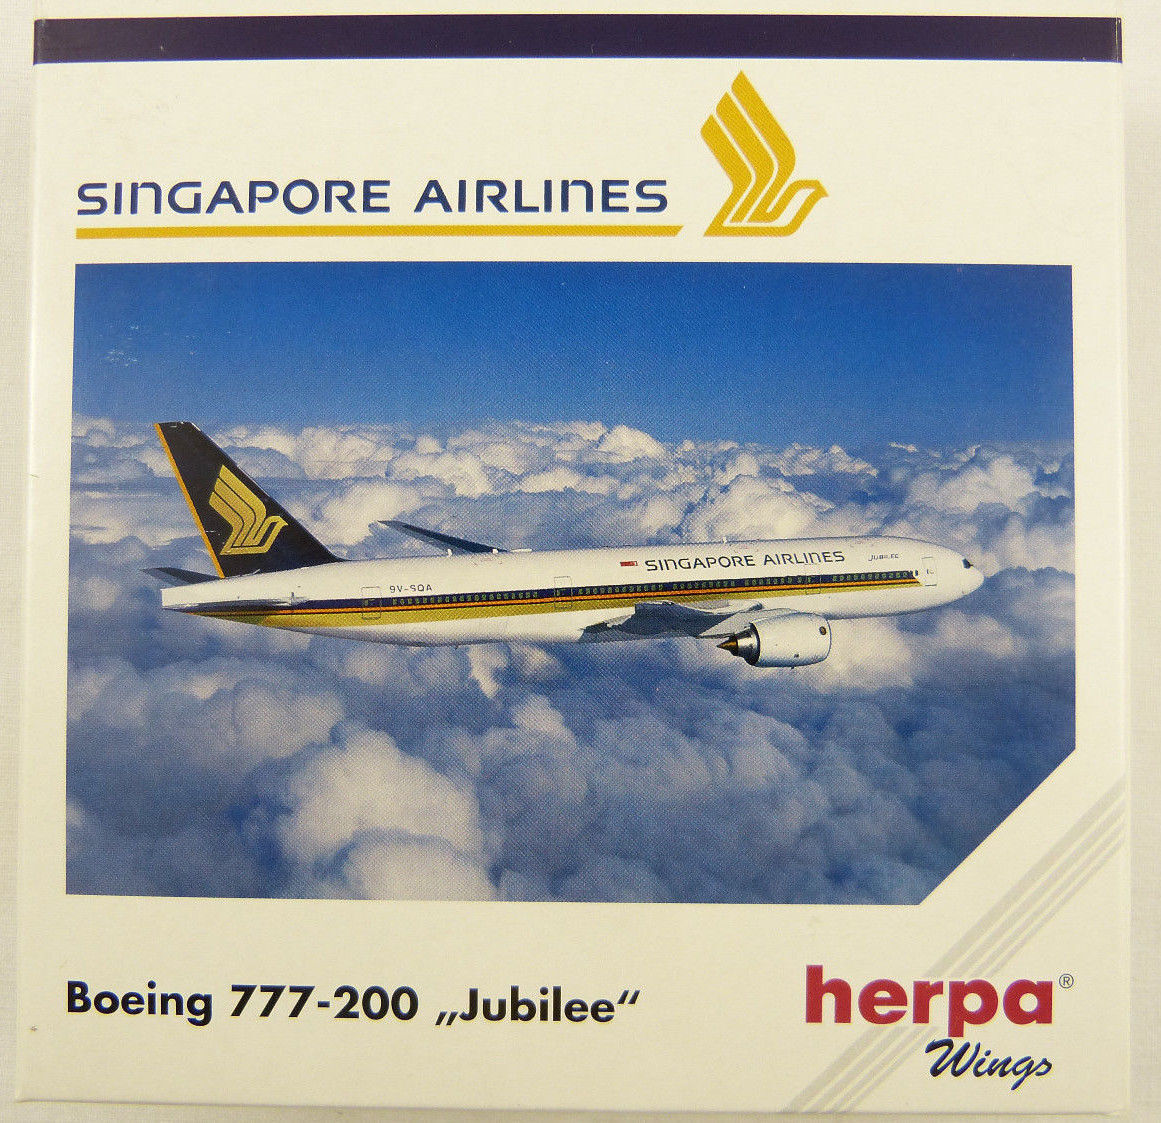 NEW HERPA WINGS 506380 SINGAPORE AIRLINES BOEING 777-200 JUBILEE 1:500 RARE MIB